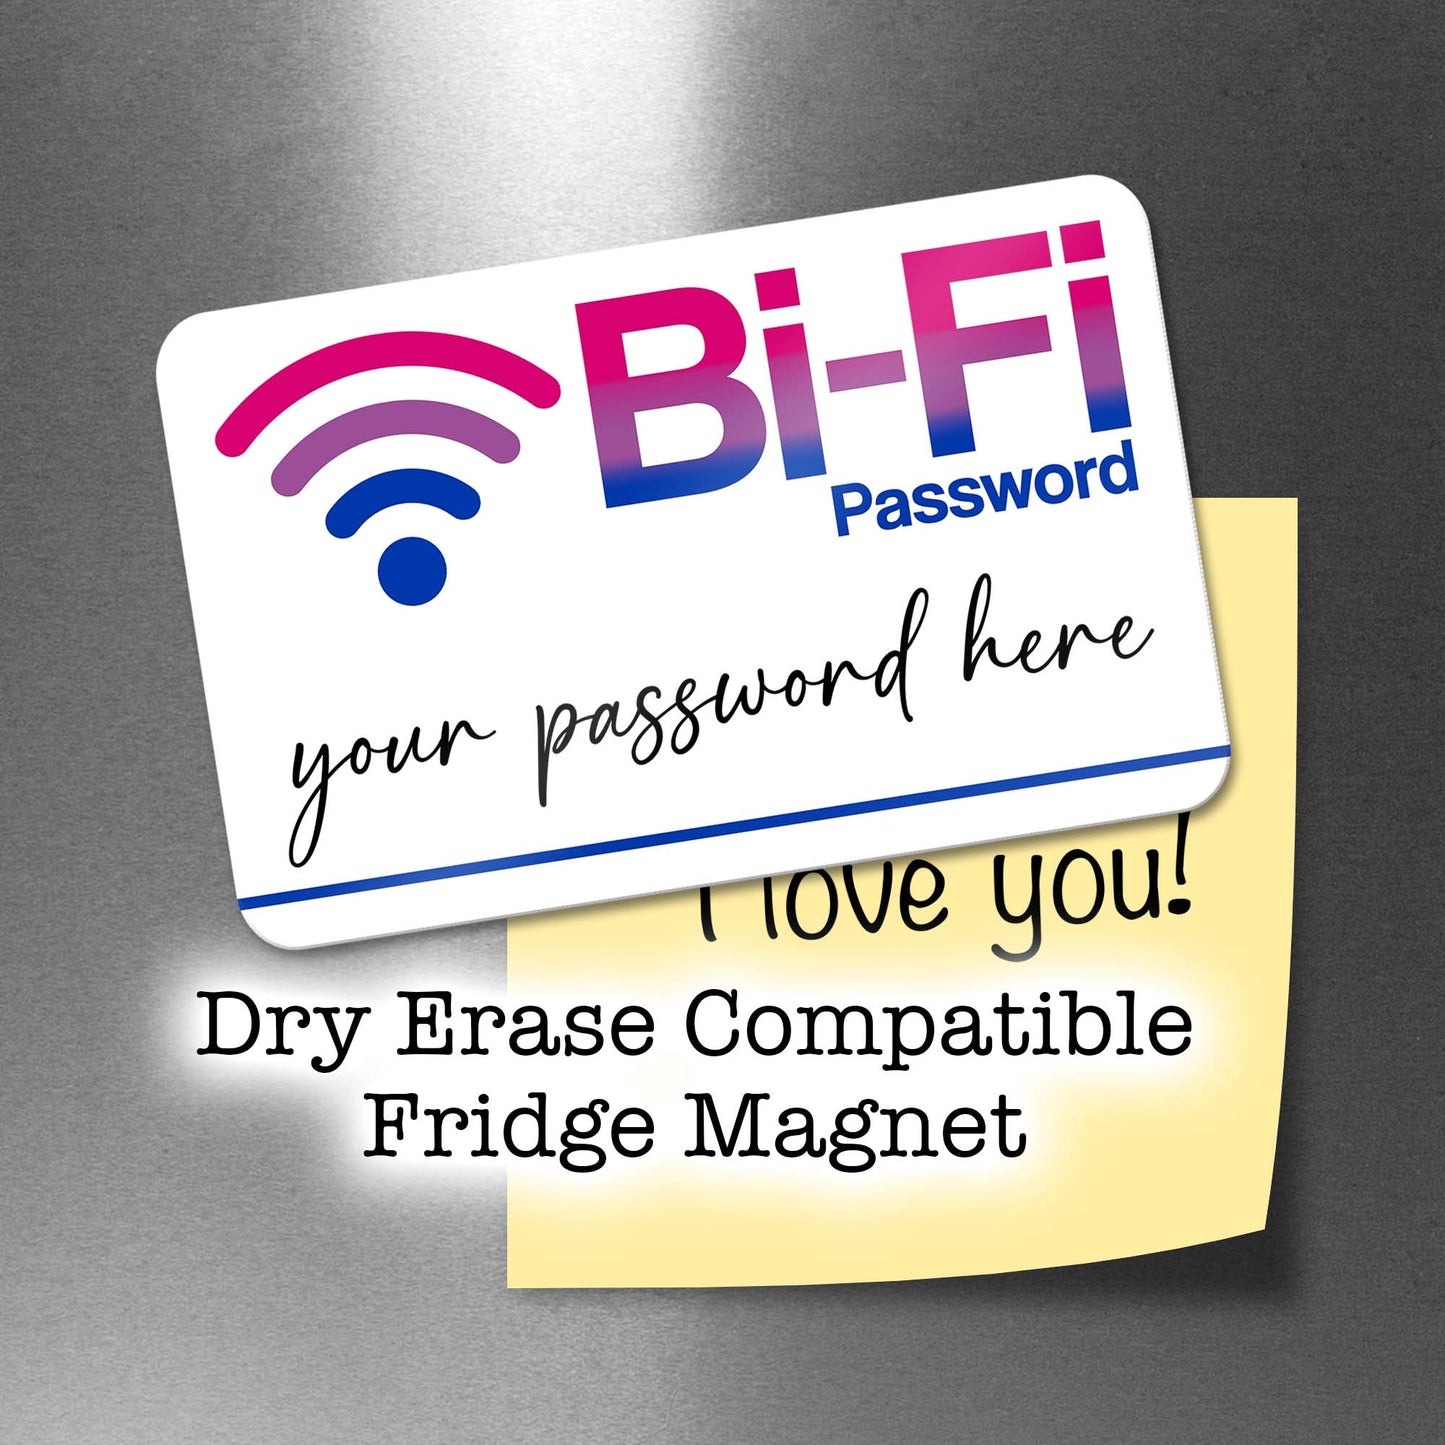 BiFi Fridge Magnet Funny refrigerator magnet dry erase dry wipe compatible